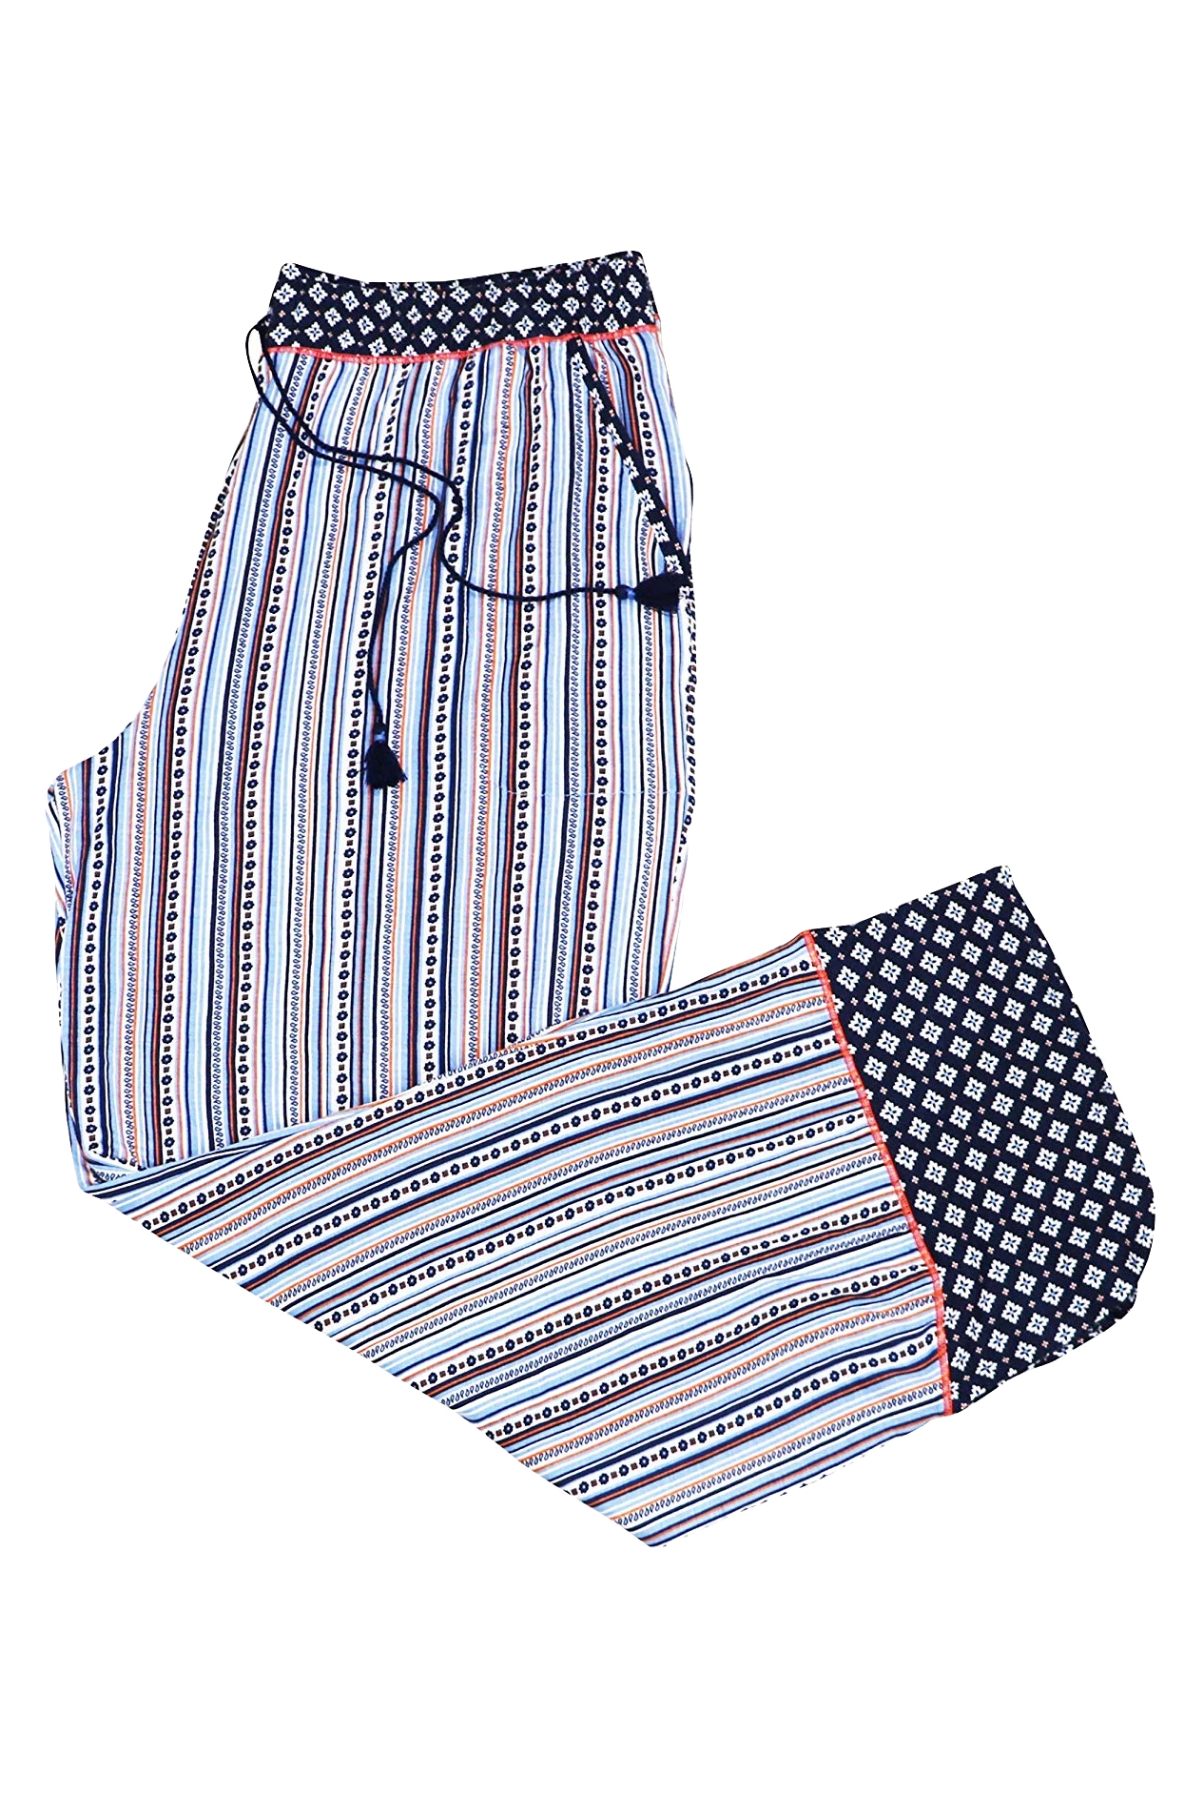 Layla Periwinkle-Stripe Drawstring-Tassle Lounge Pant